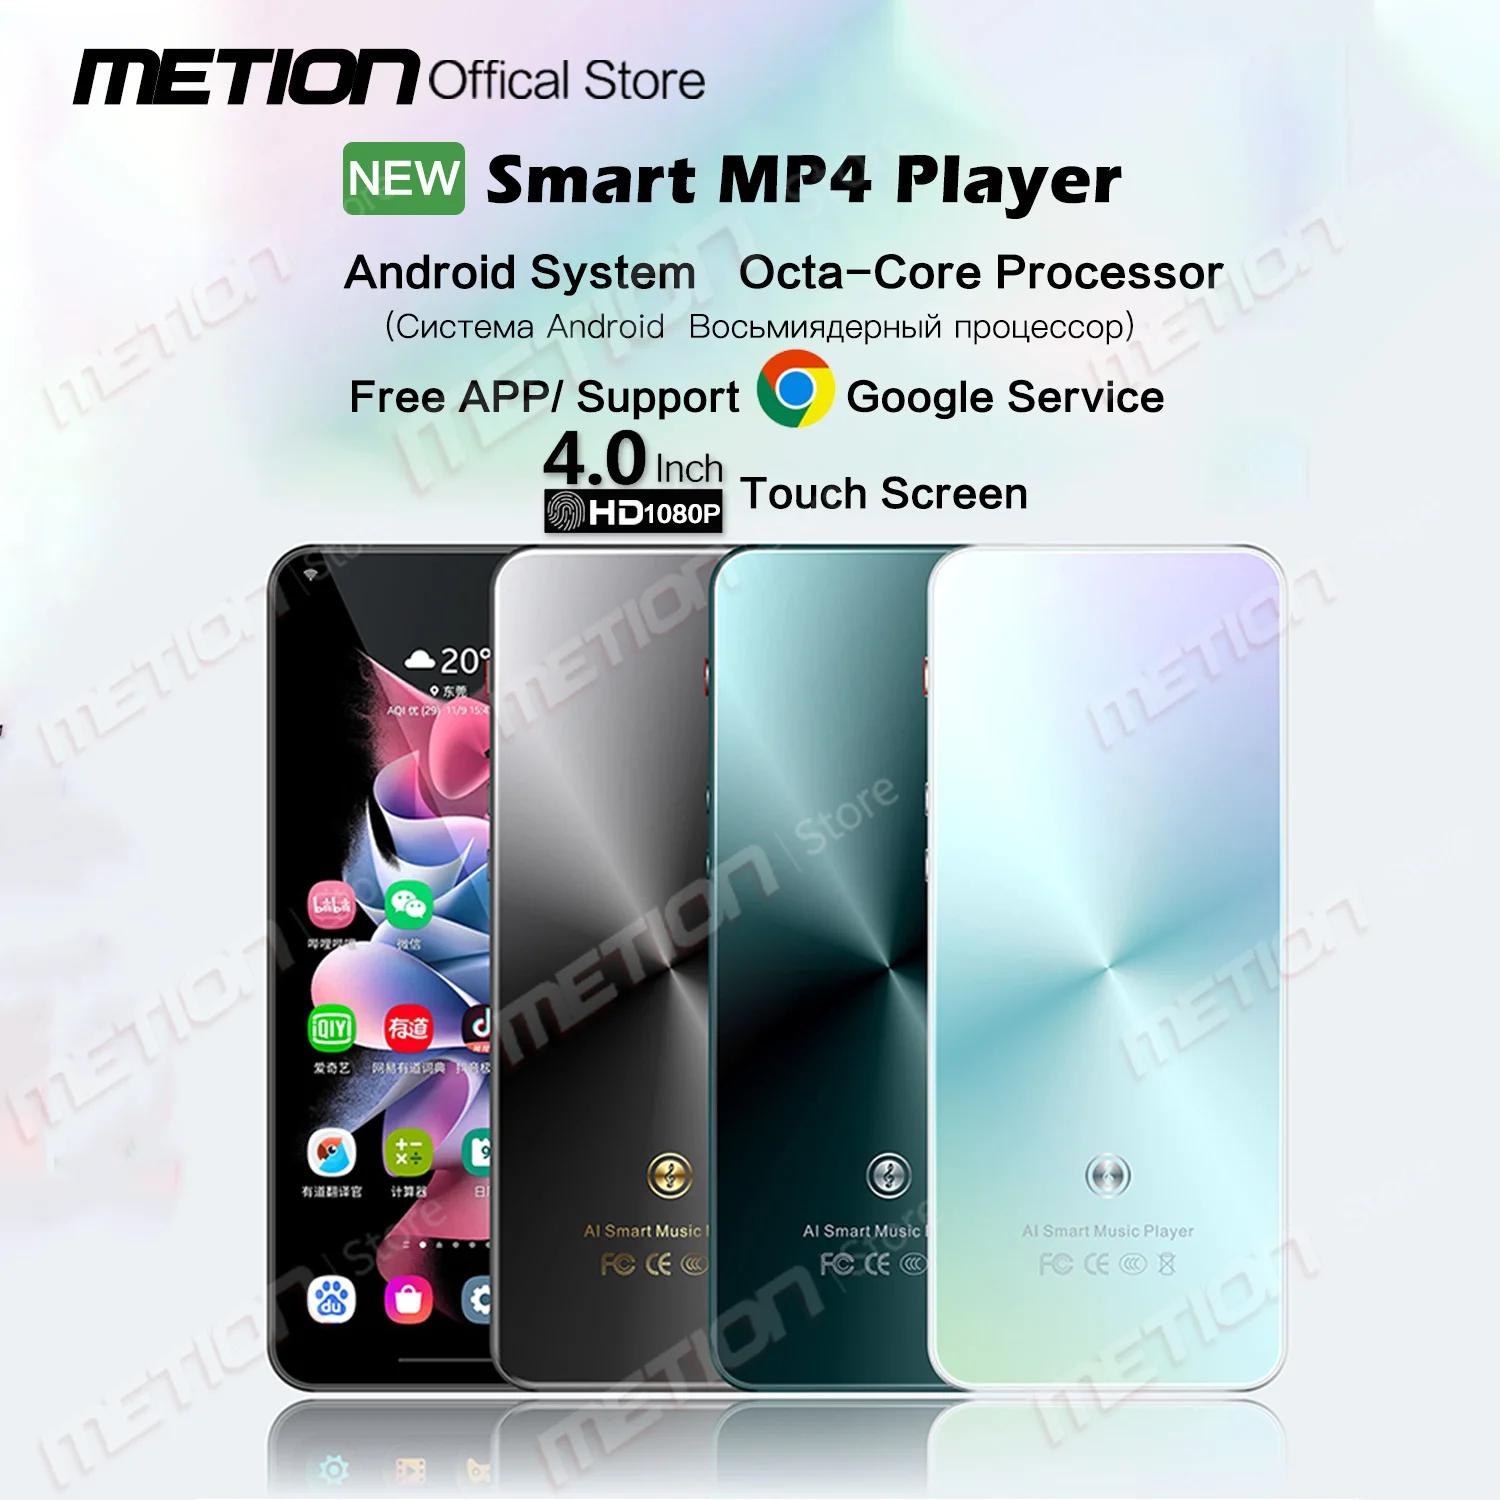 Reproductor MP4 MP3 portátil de 4,0 pulgadas, WiFi, Bluetooth